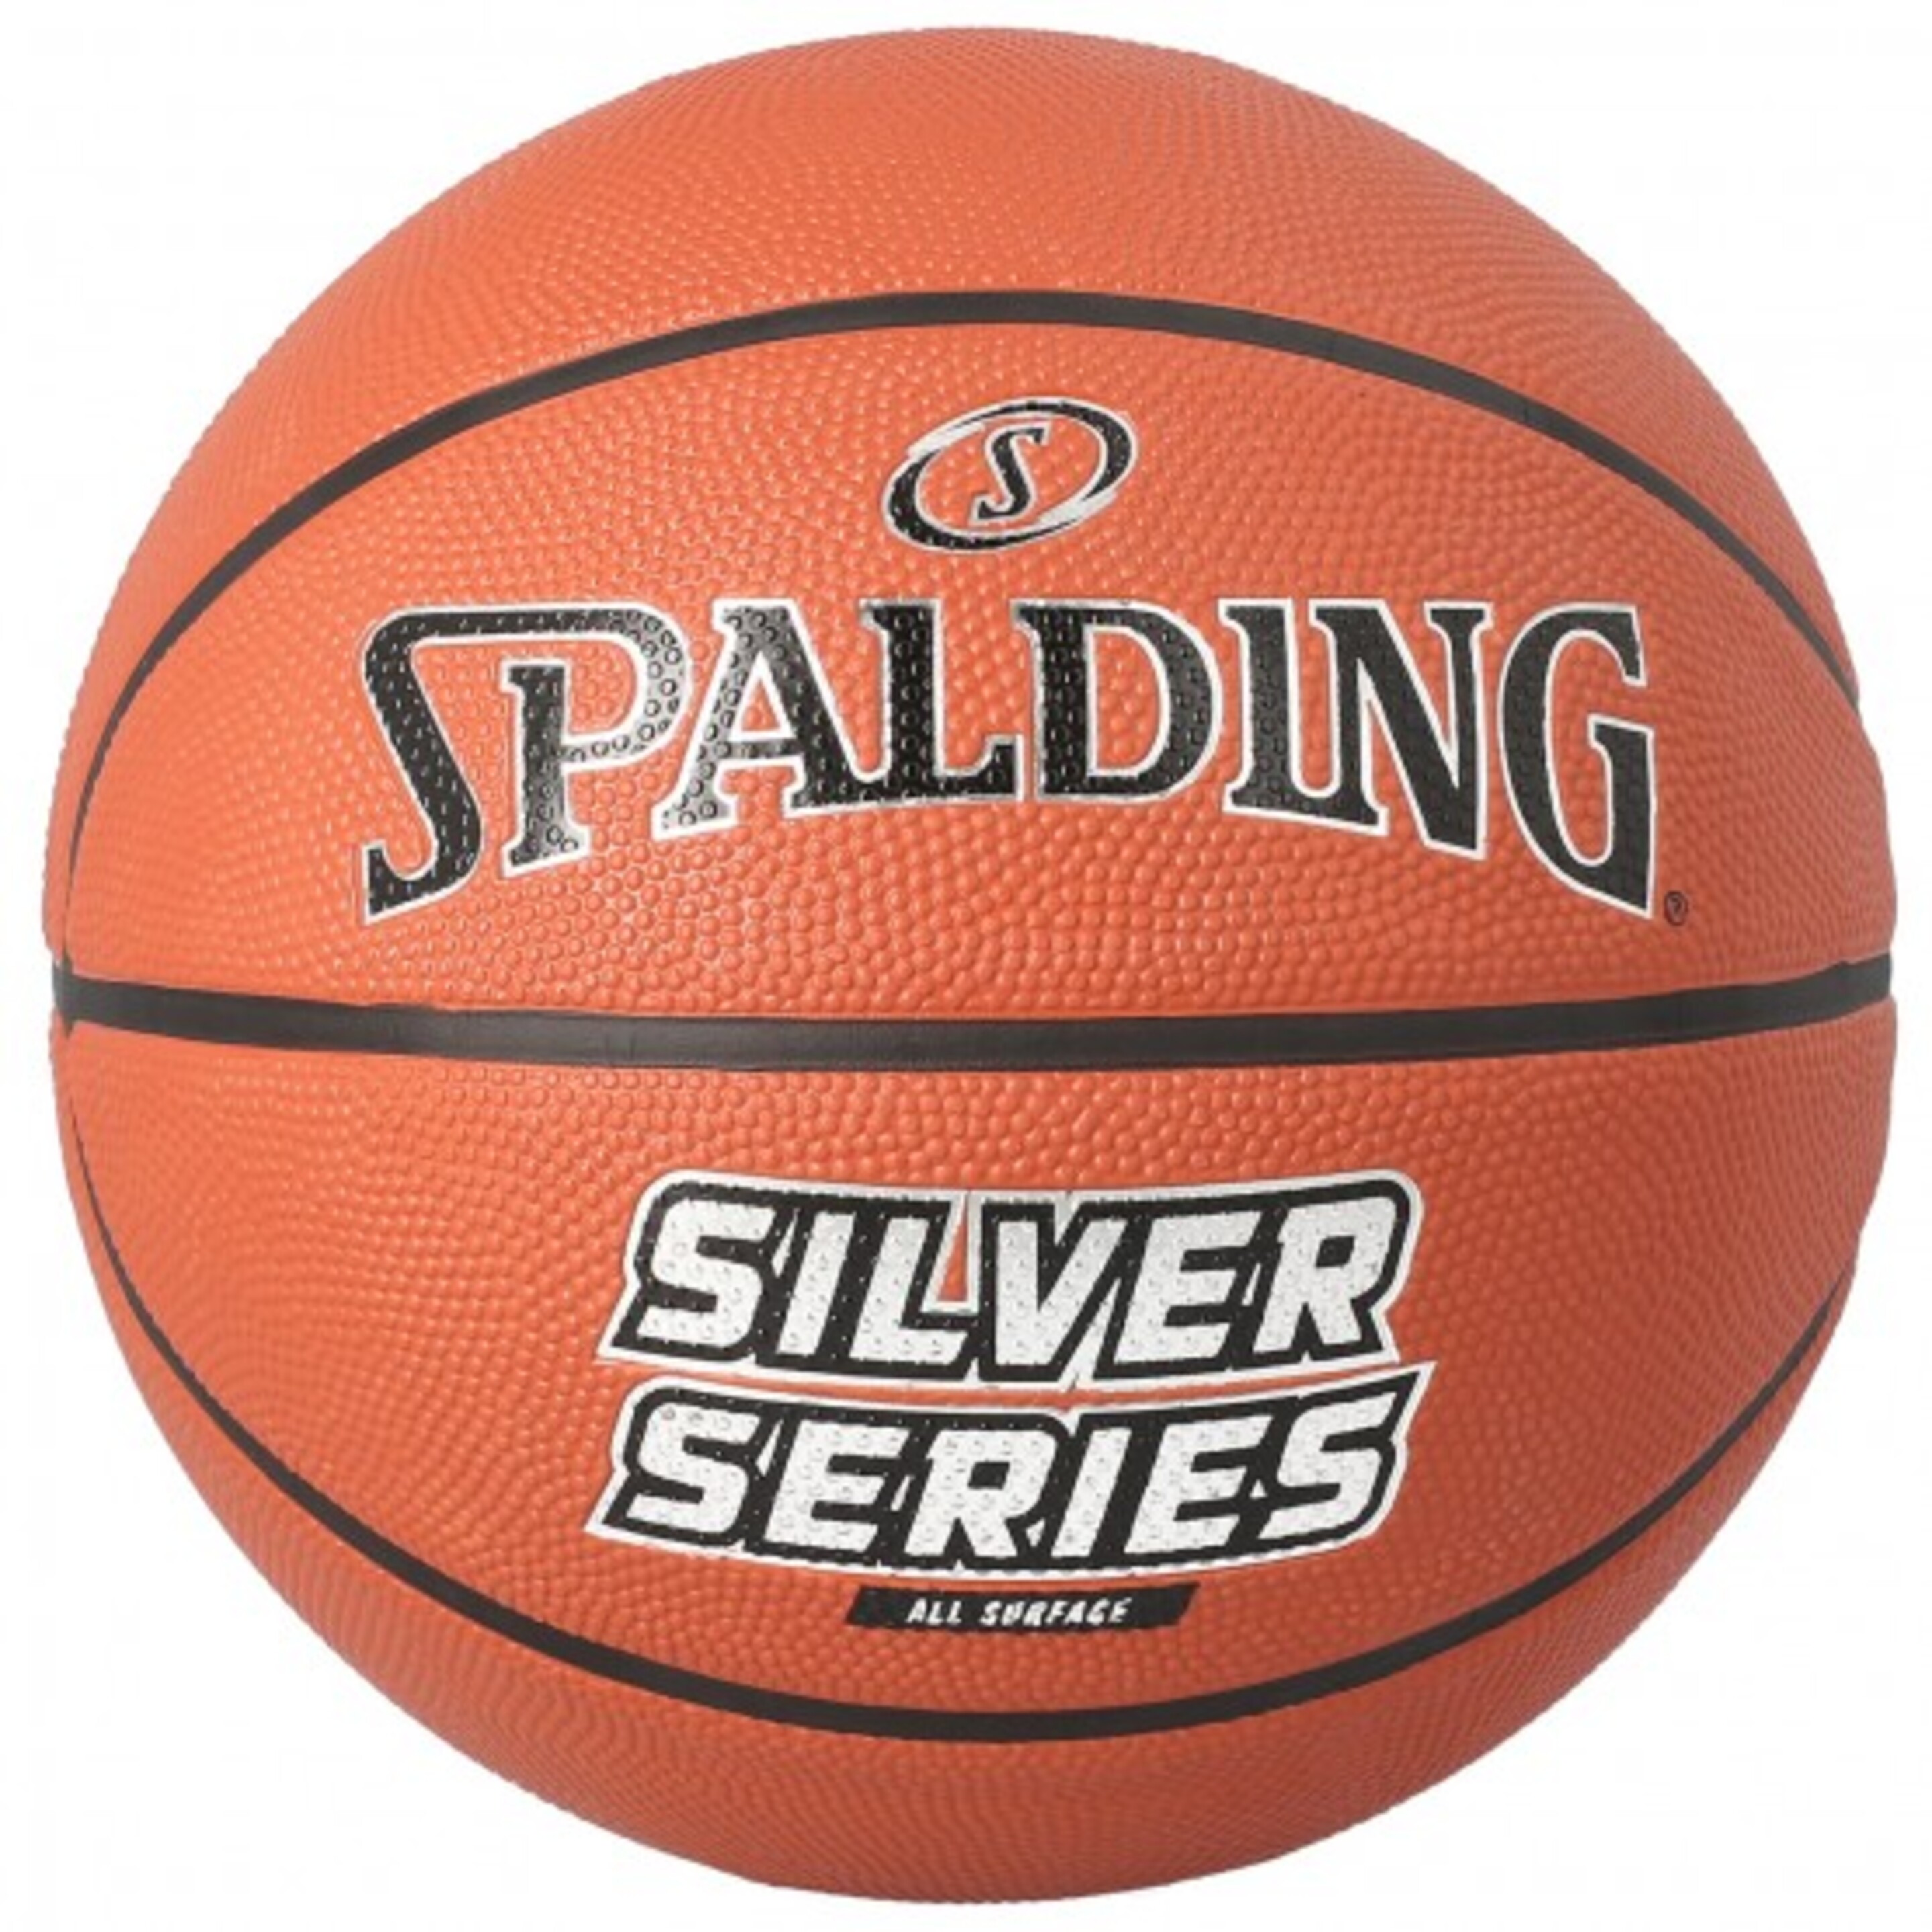 Basquetebol Spalding Silver Series Sz6 - naranja - 